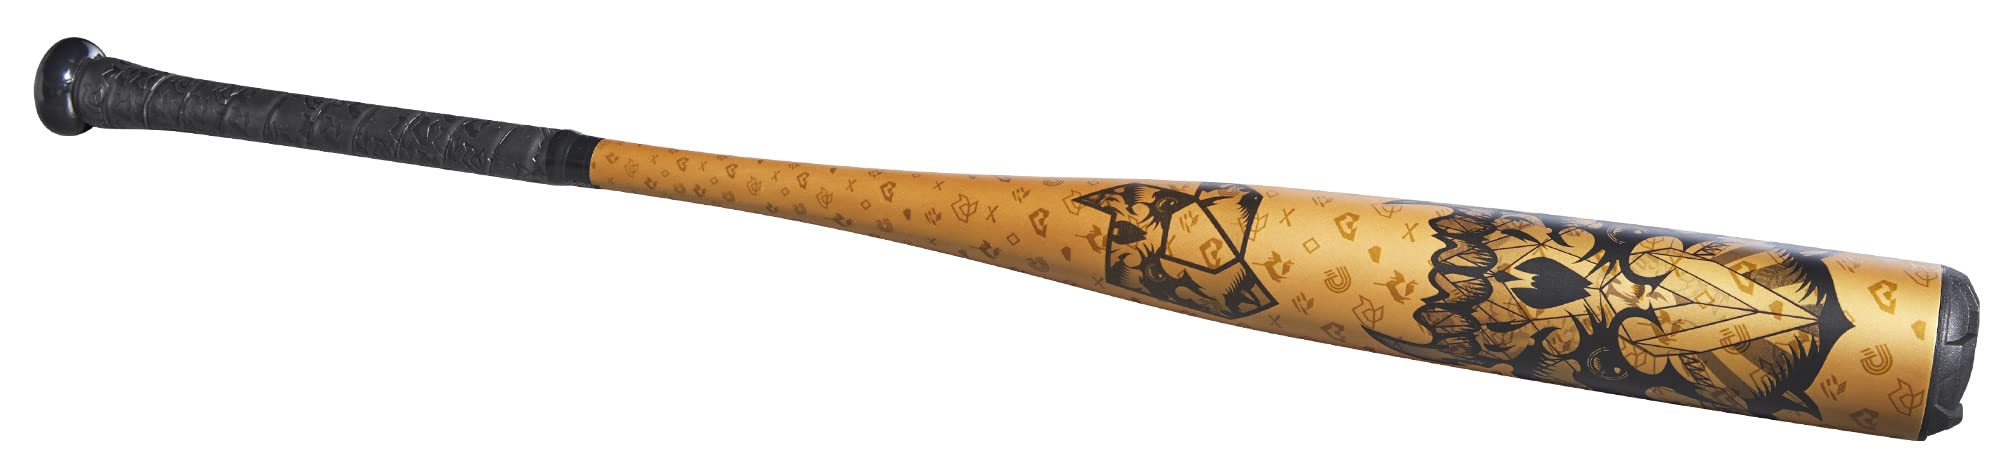 DeMarini 2023 Voodoo® One Gold (-3) BBCOR Baseball Bat